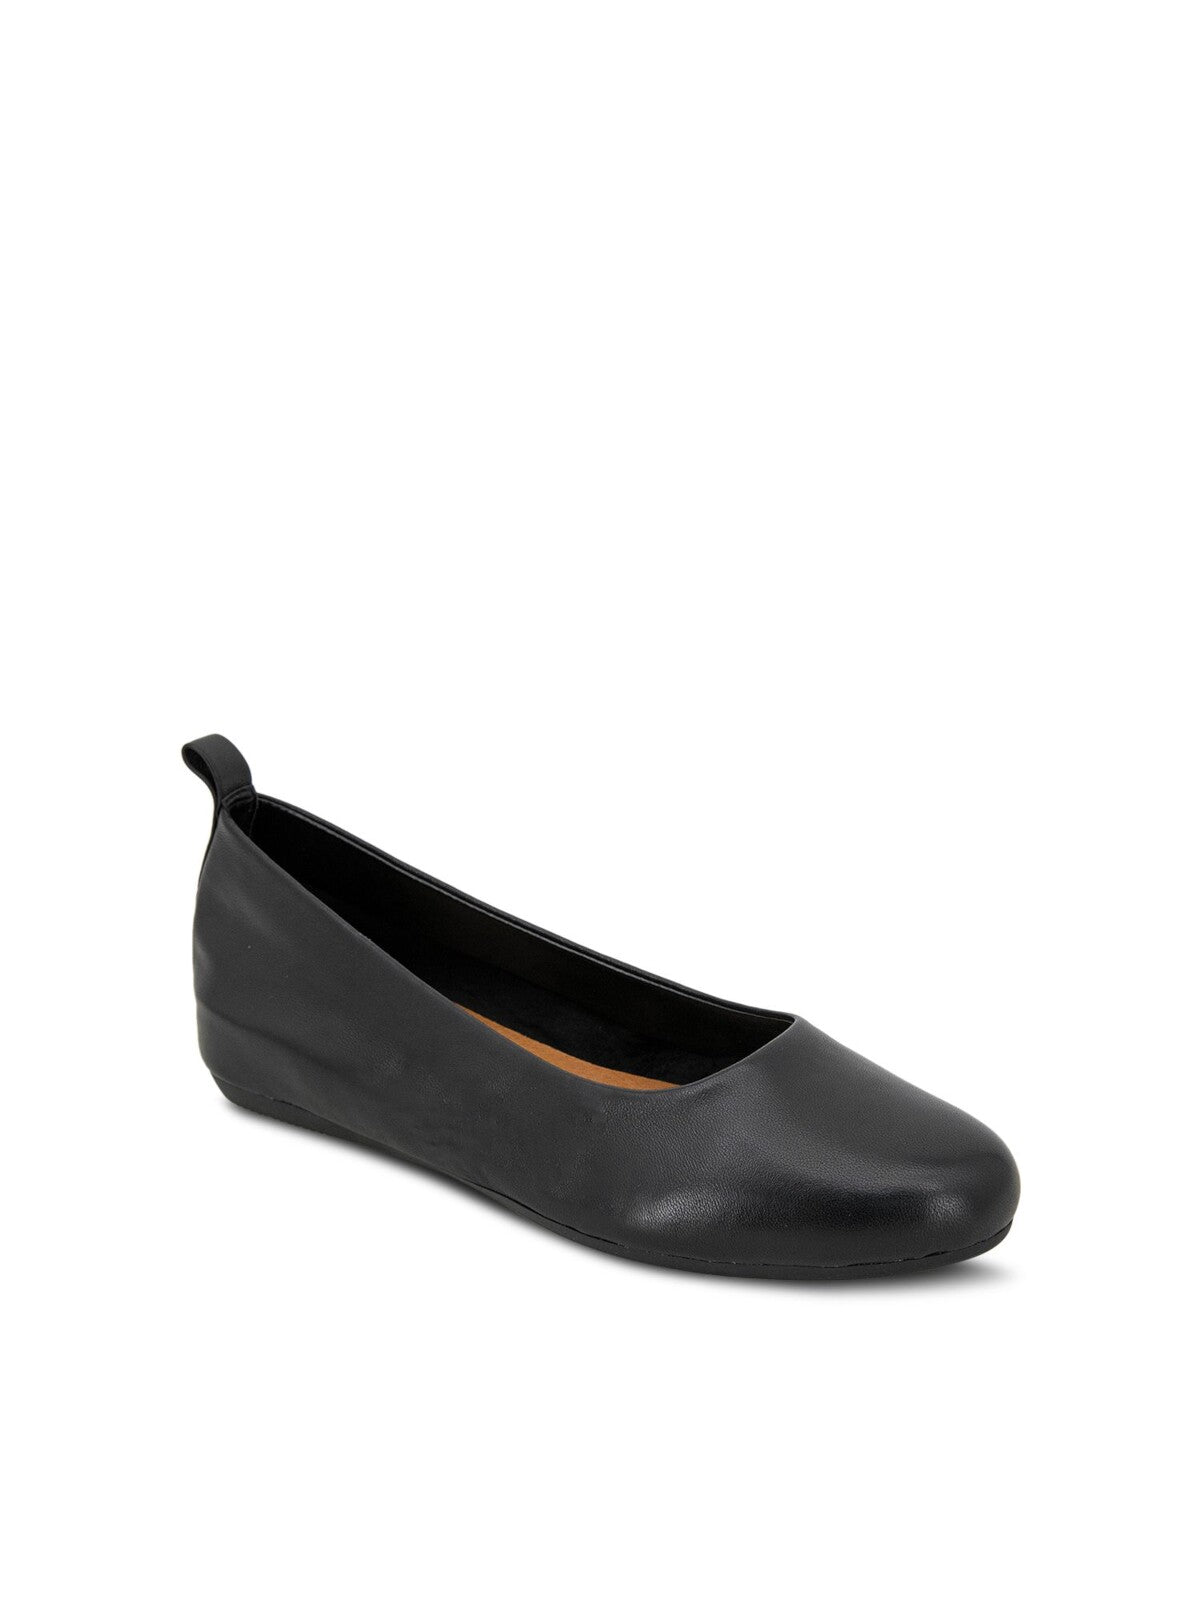 ANDRE ASSOUS Womens Black Comfort Nalah Round Toe Slip On Leather Flats Shoes 6 M